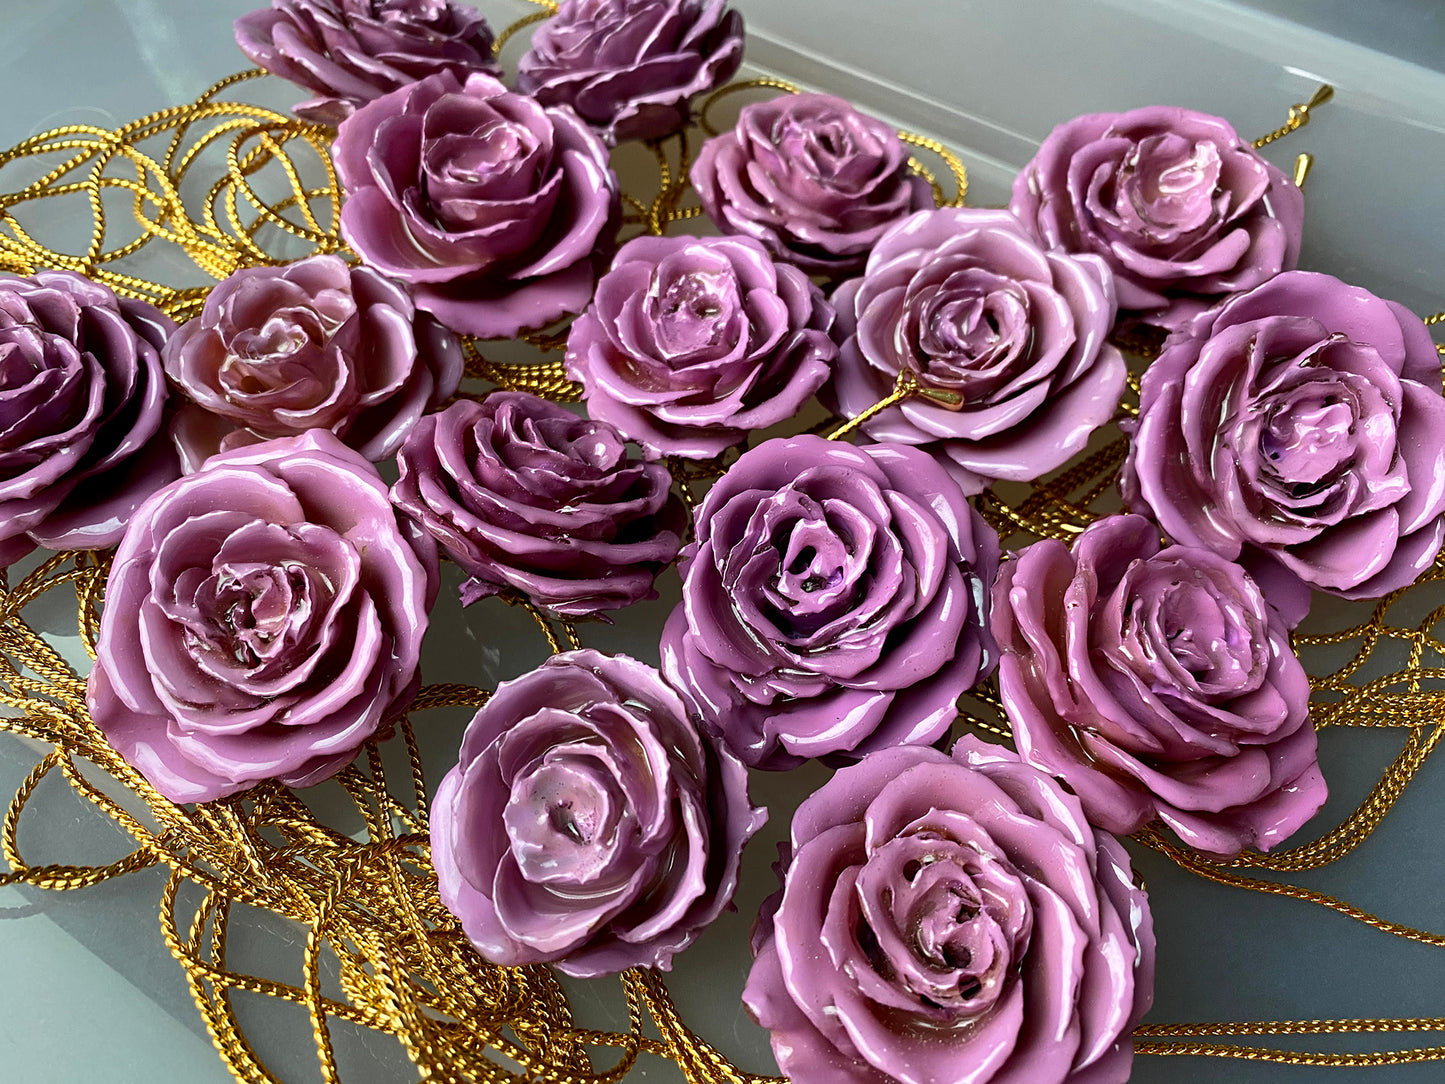 Mini Rose Mini 1.5-2.25 inch Pendant Necklace 18 inch Gold Plated 24K (Purple Lilac)